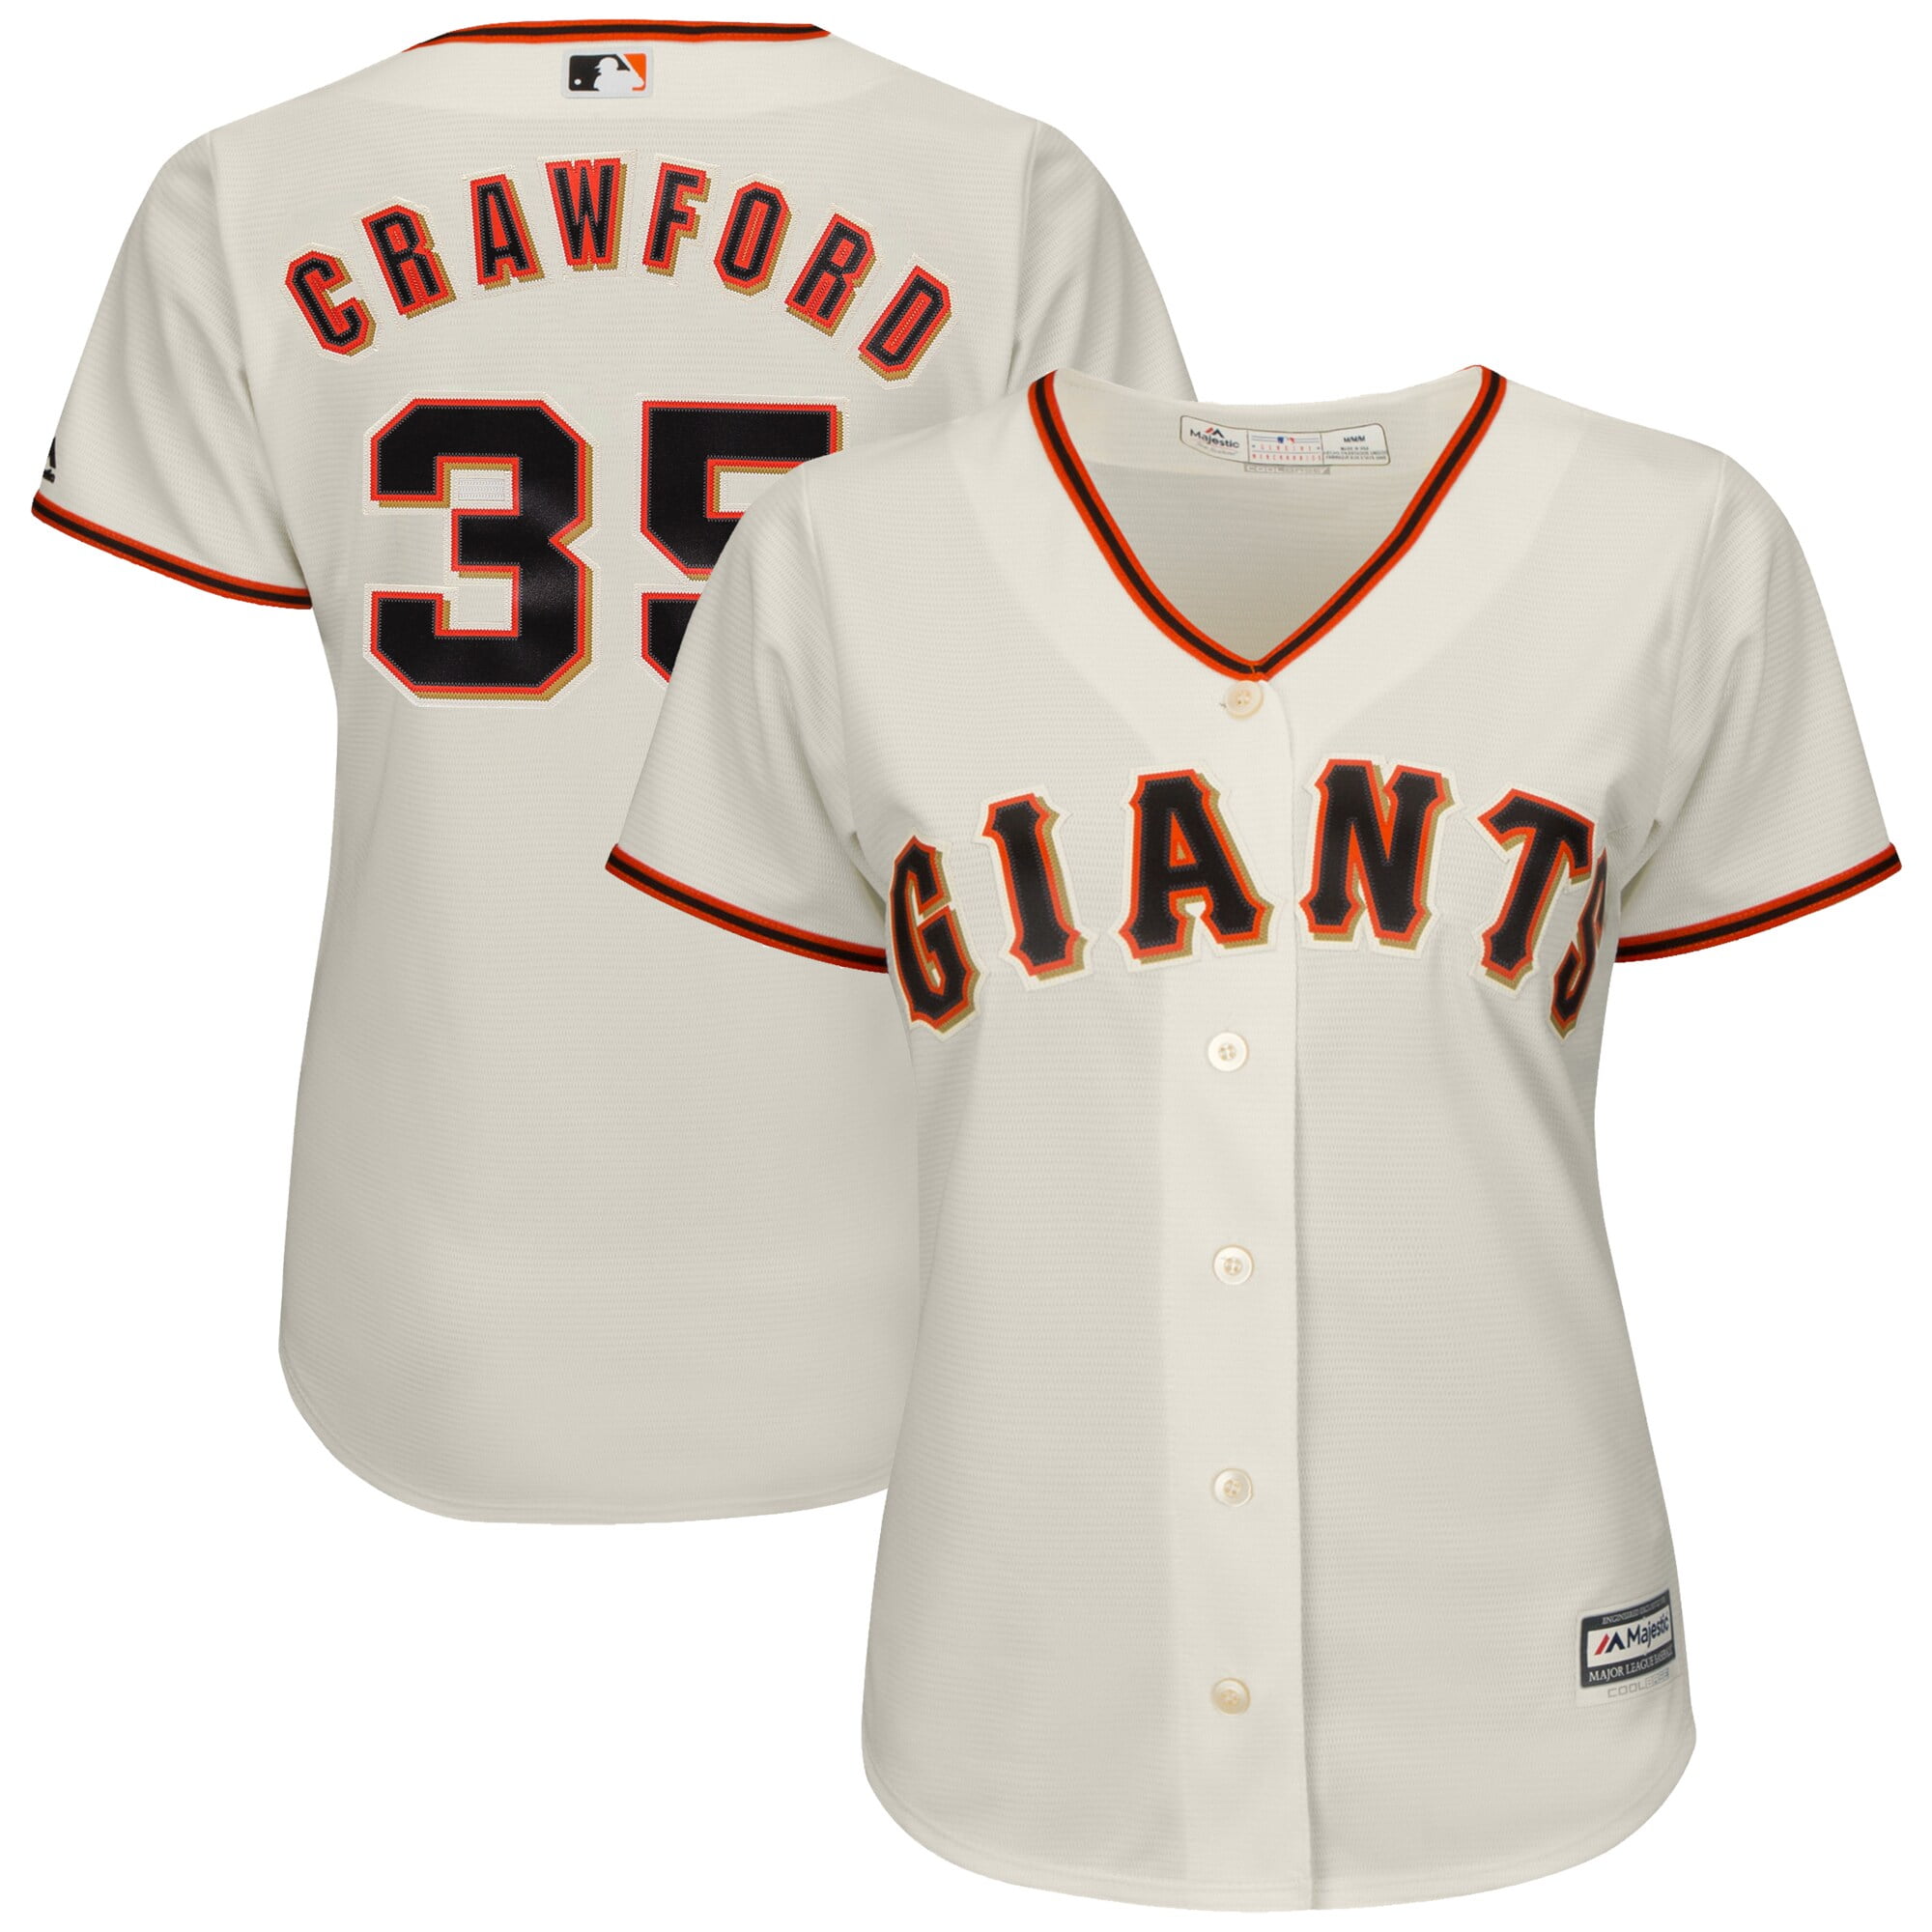 brandon crawford giants jersey